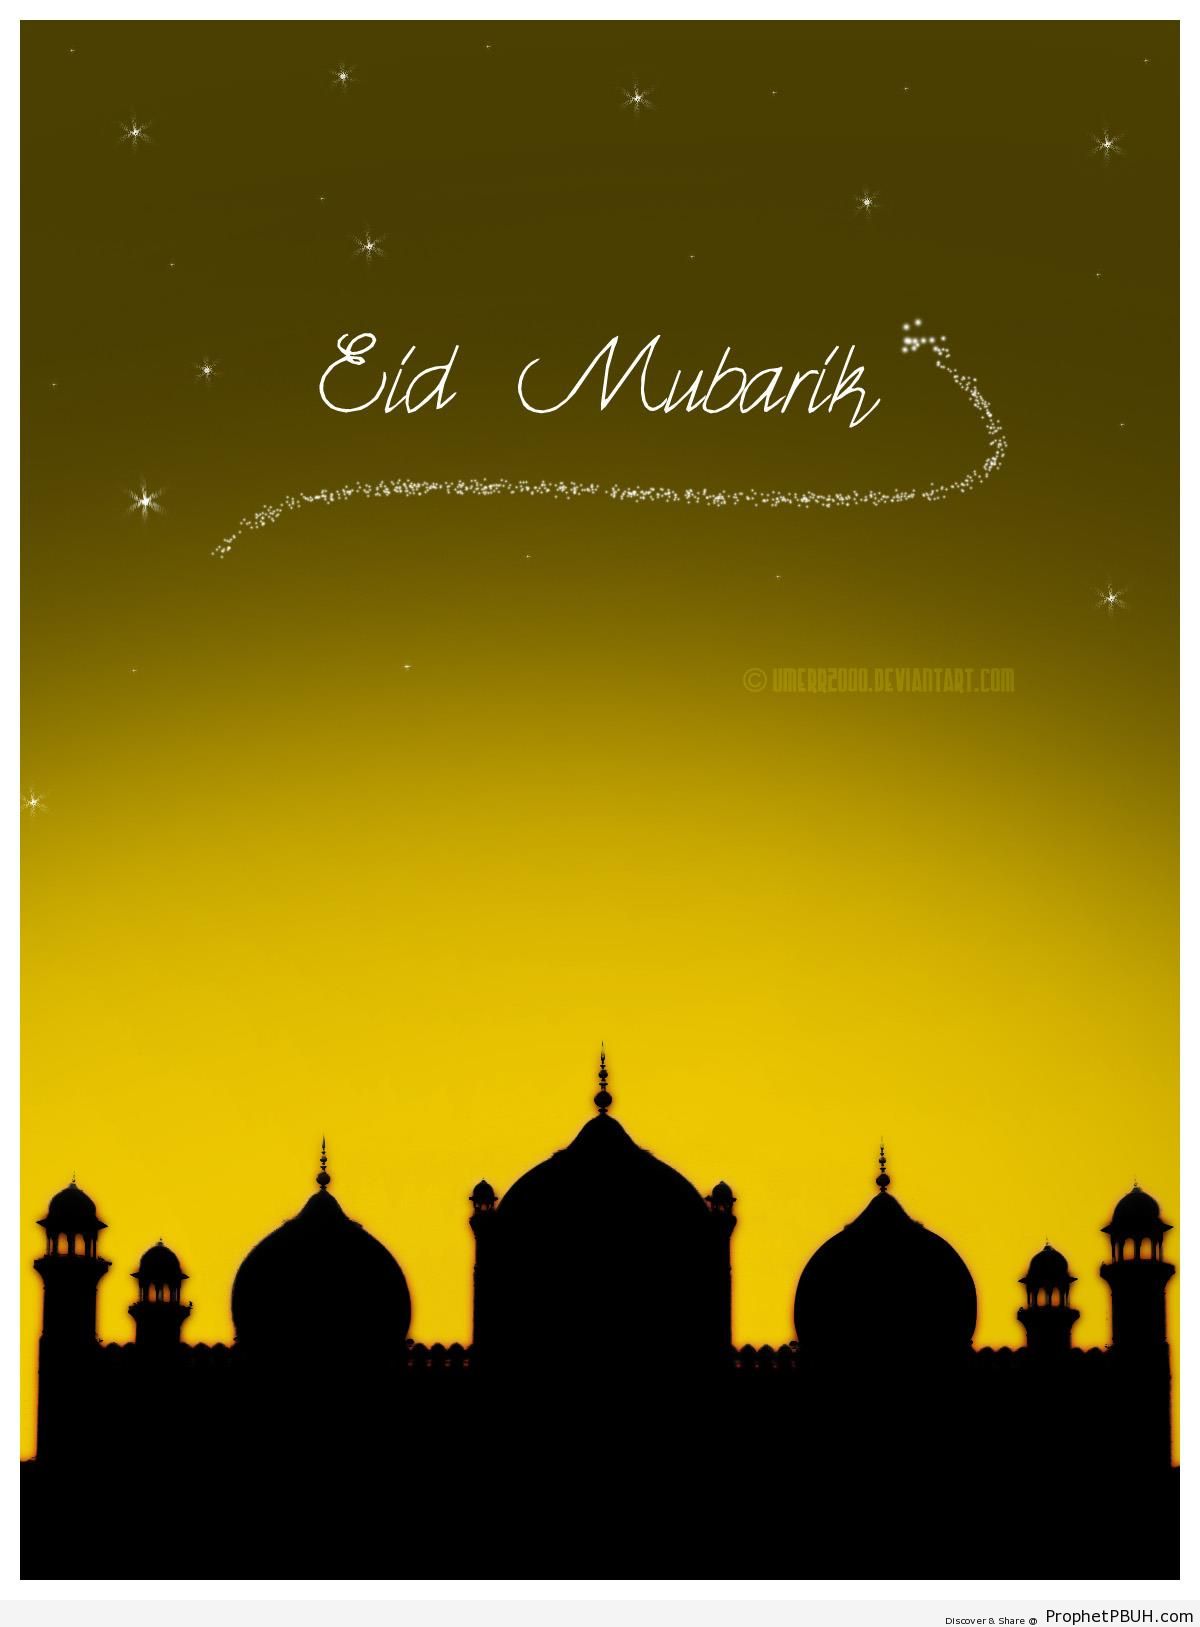 Eid Mubarak Greeting on Evening Mosque Illustration - Drawings of Minarets